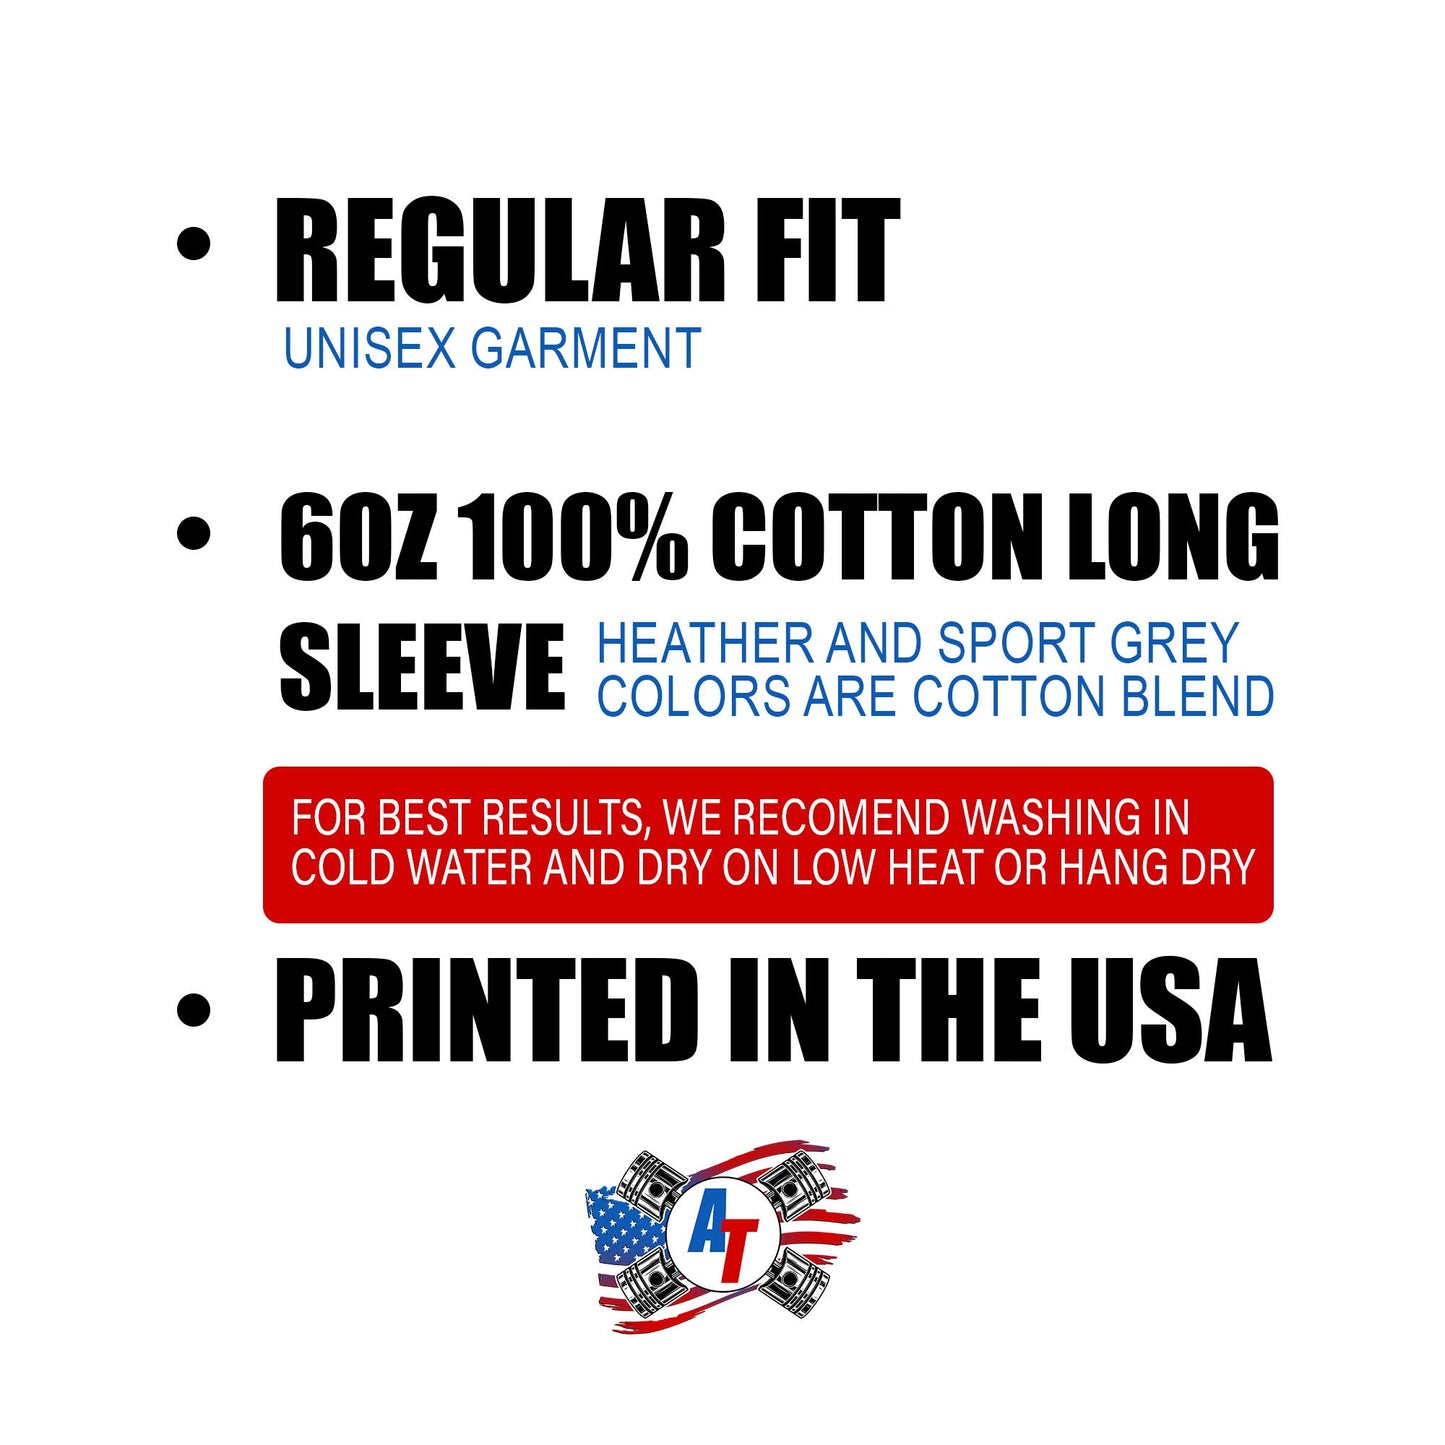 Diesel Mechanic American Flag Long Sleeve T-Shirt